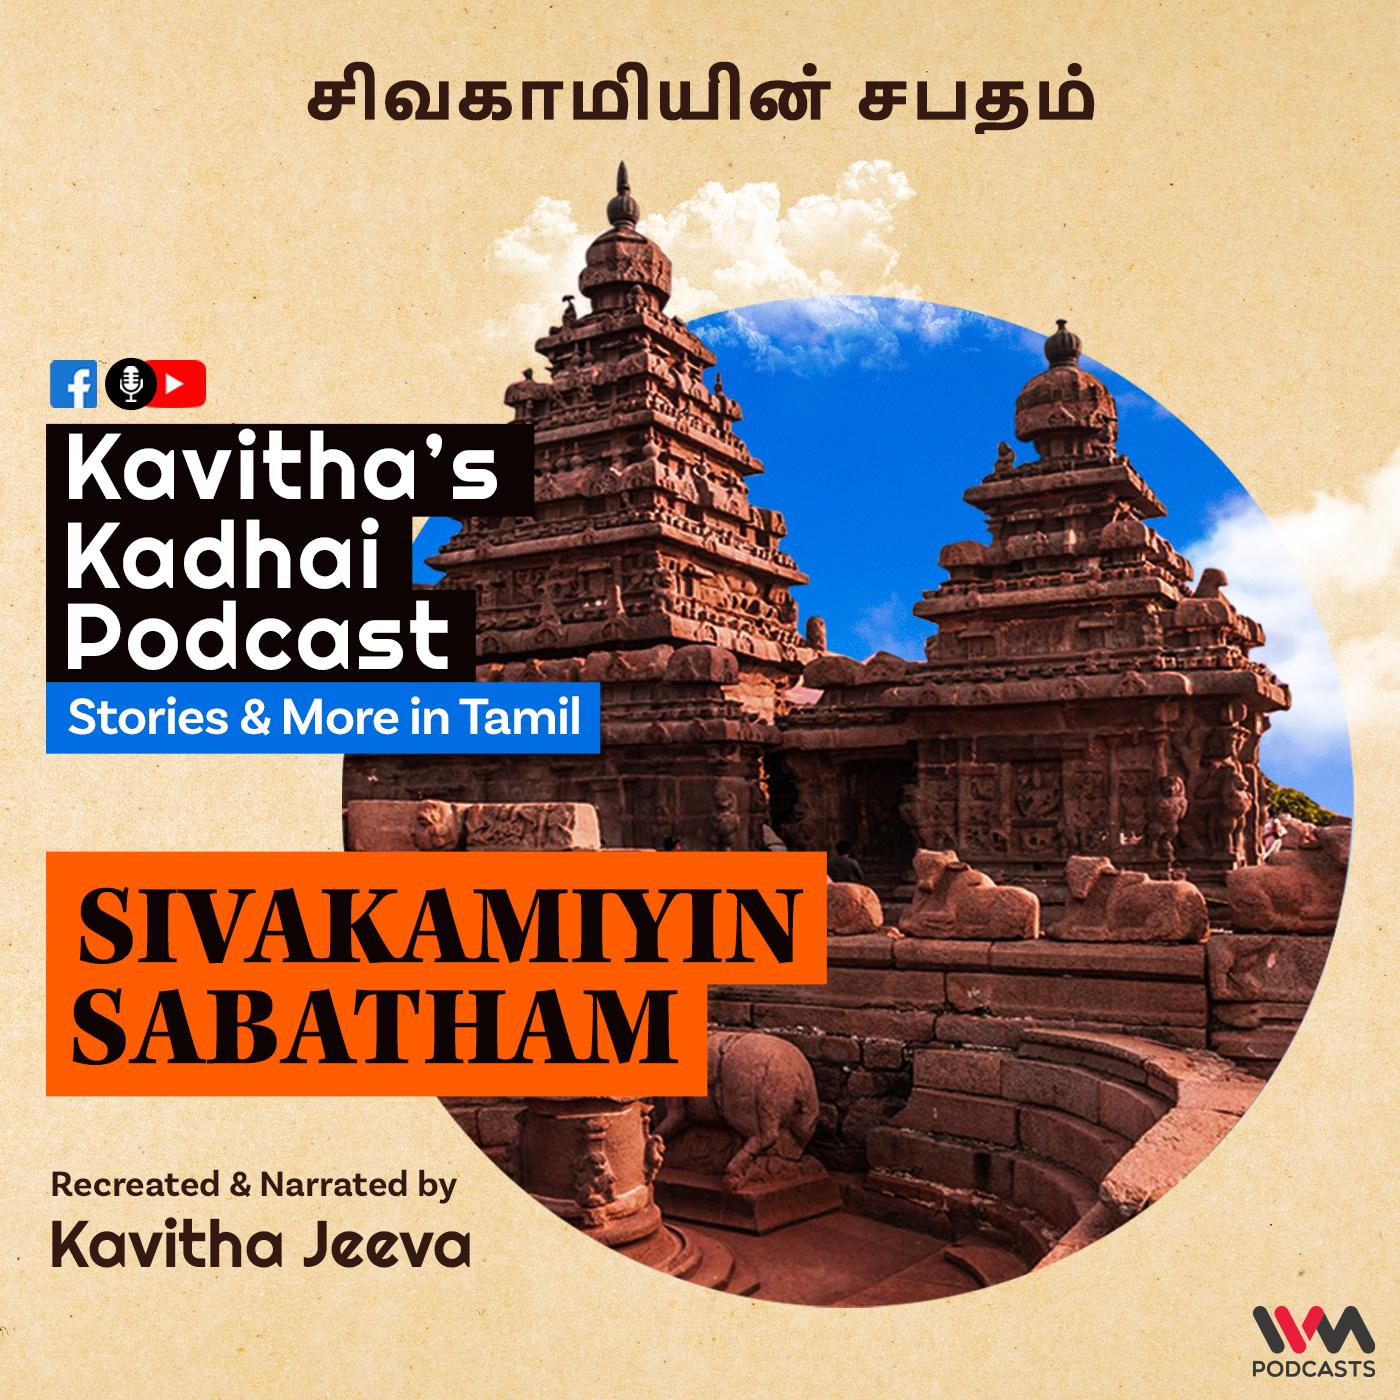 KadhaiPodcast’s Sivakamiyin Sabatham with Kavitha Jeeva - Episode #105